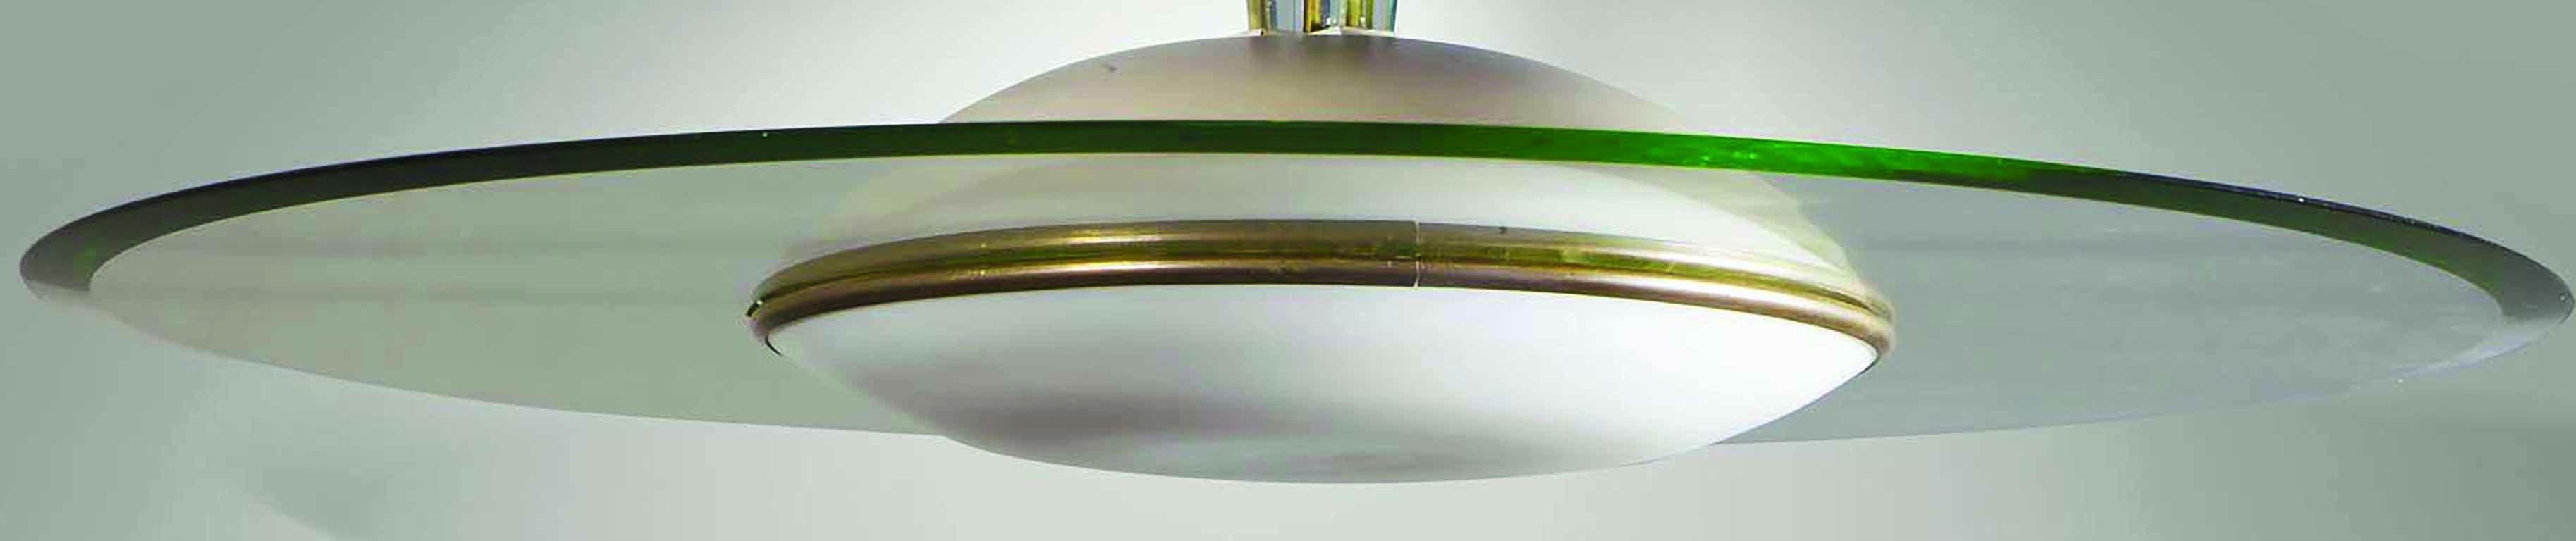 Italian Fontana Arte, Suspended Glass Chandeliers in Glass, Opal Glass and Brass